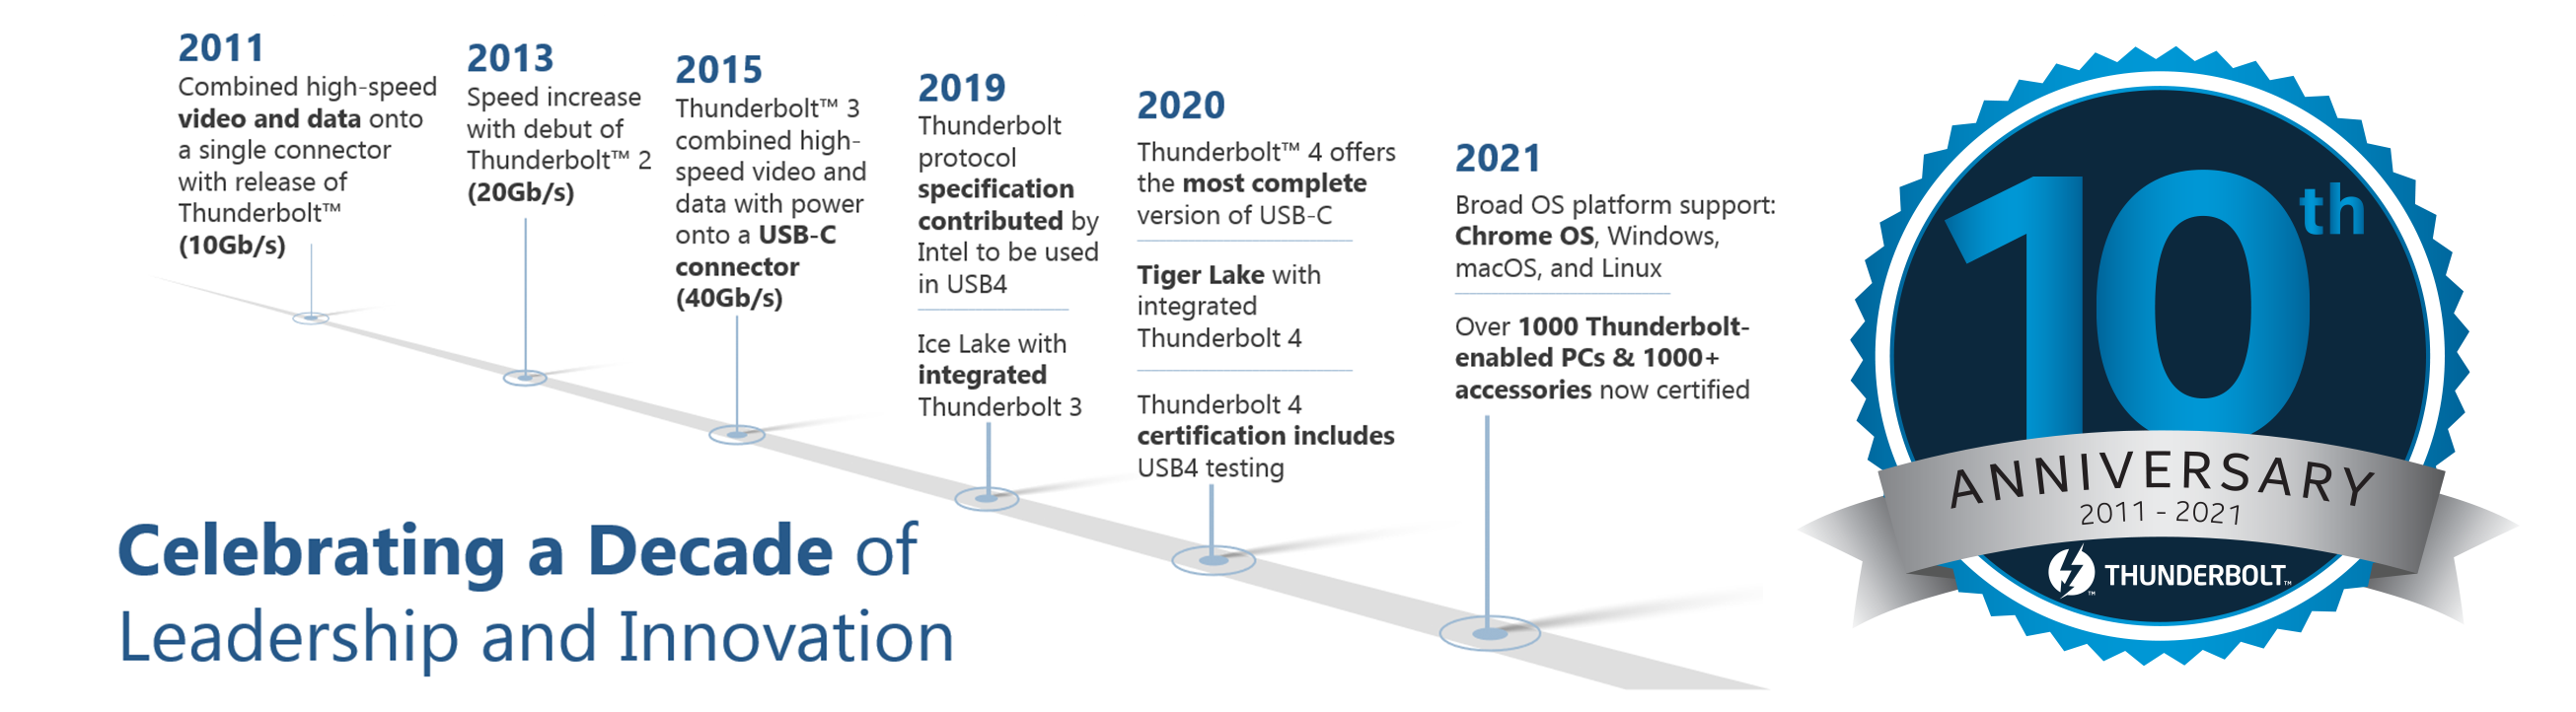 Thunderbolt technology: Celebrating 10 years of leadership and innovation